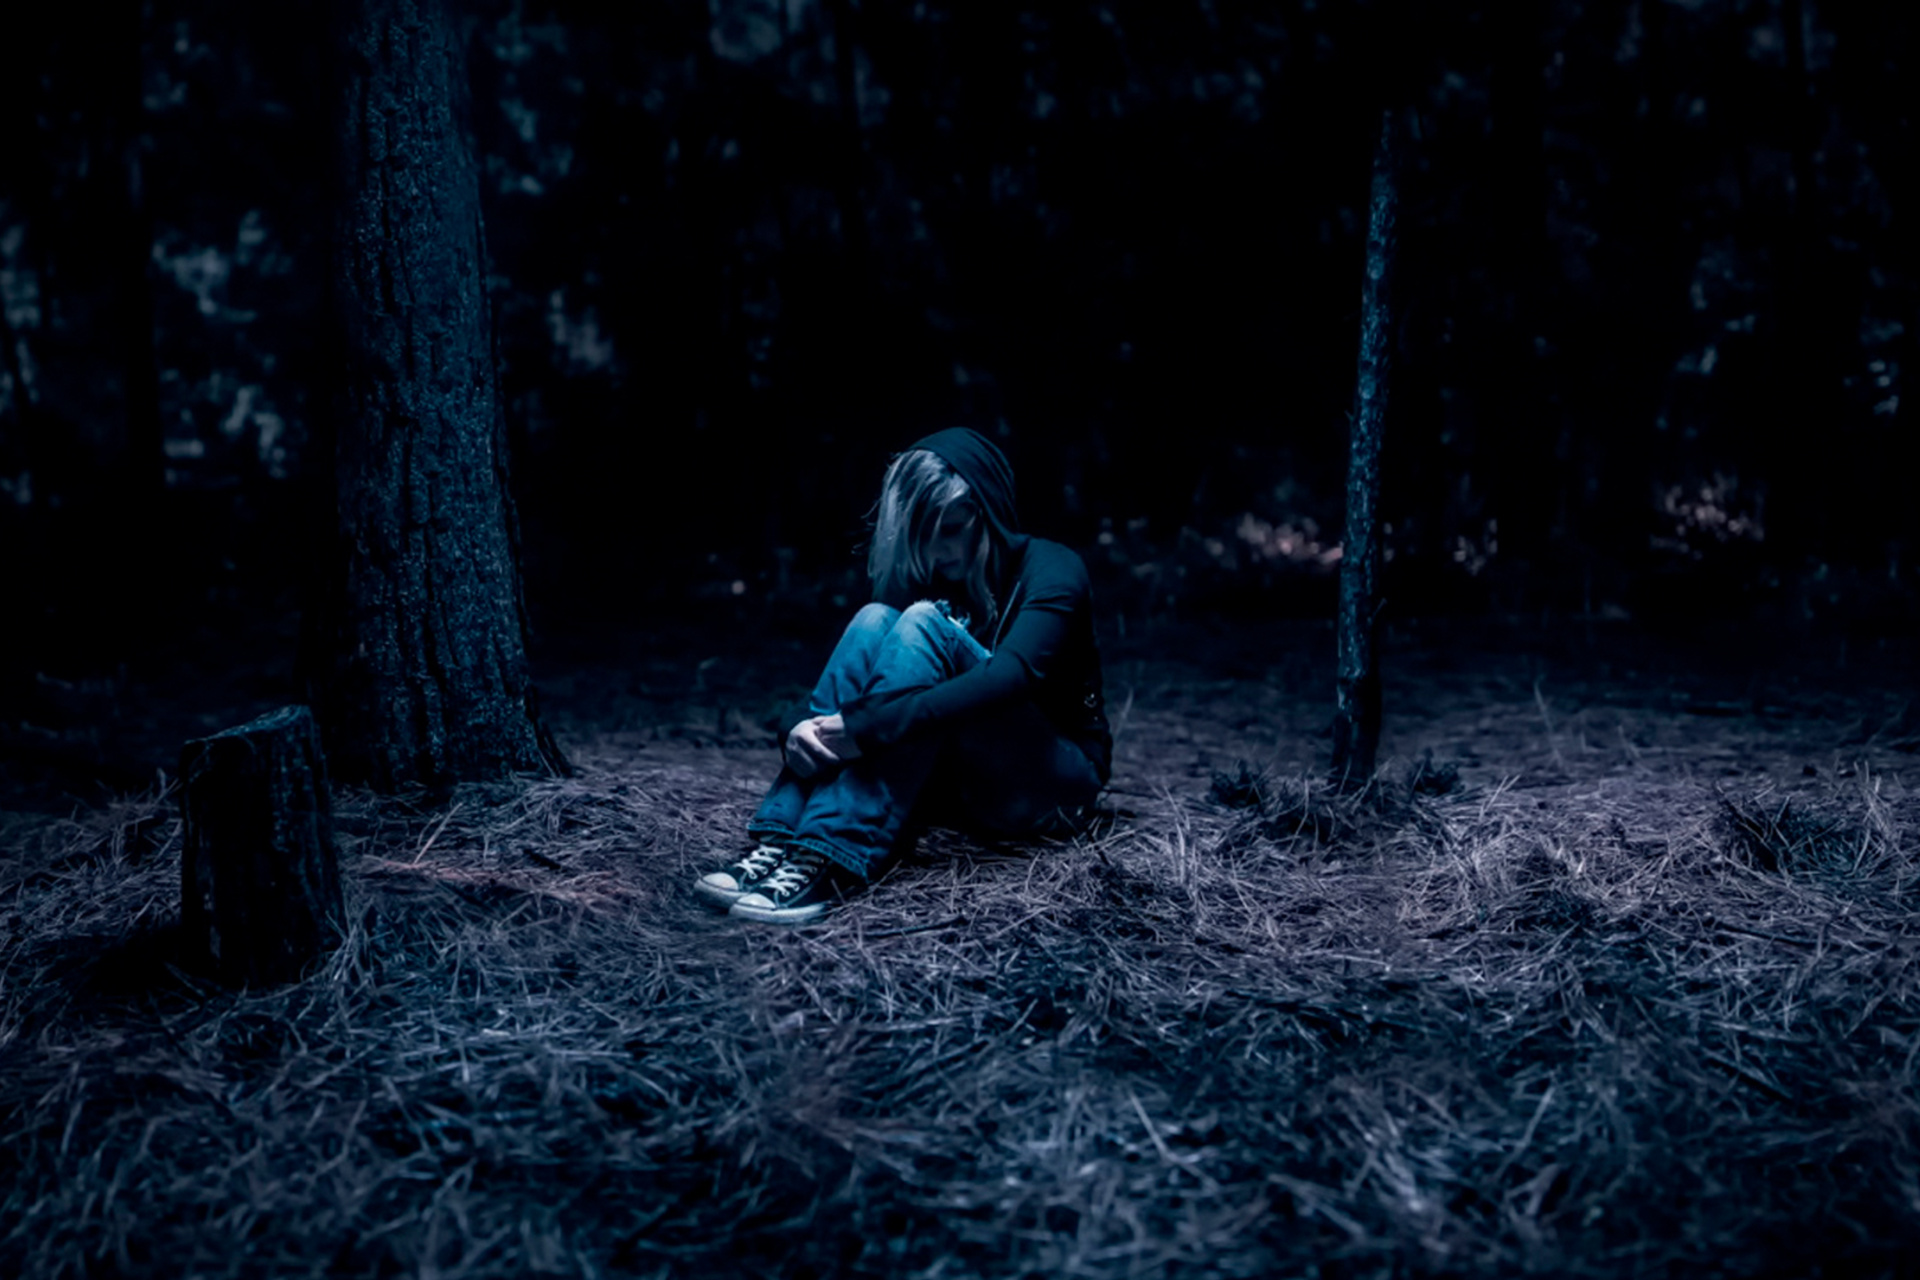 Shorts in the dark. Девочка в лесу. Человек в ночном лесу. Девушка ночью в лесу. Человек в лесу ночью.